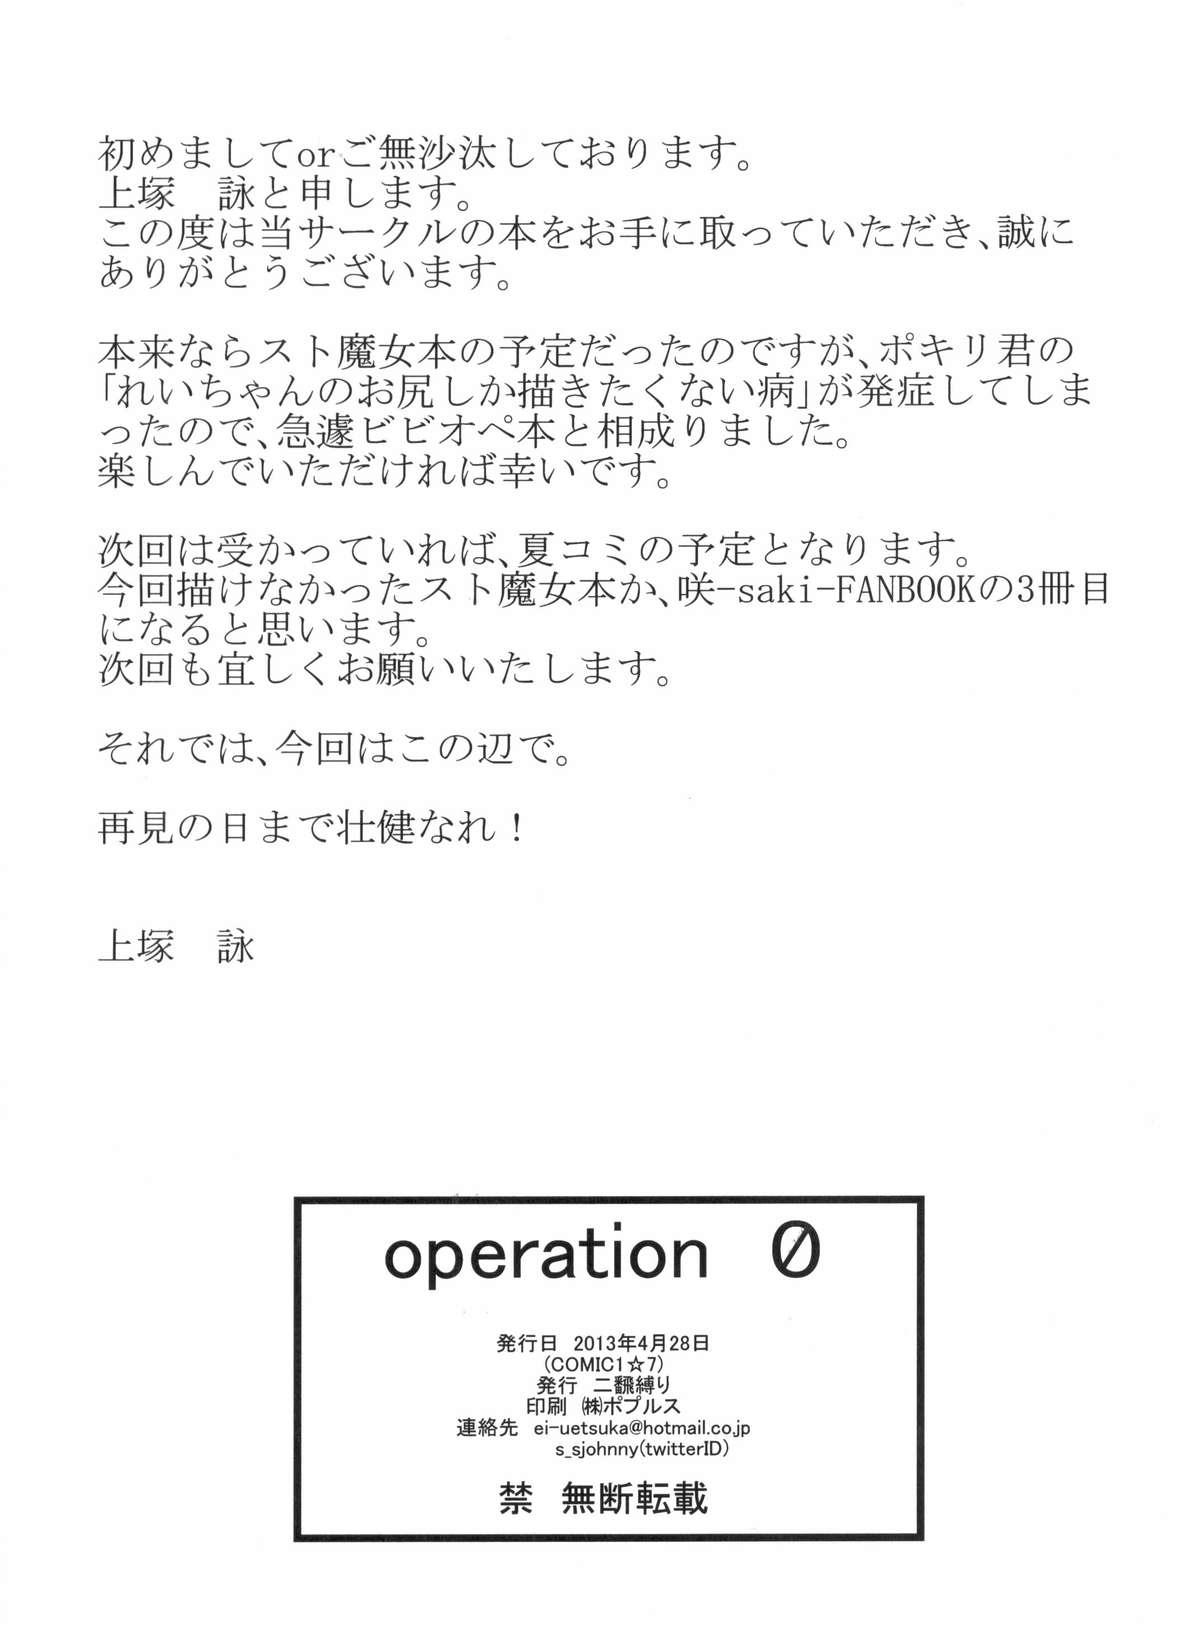 operation 0 22